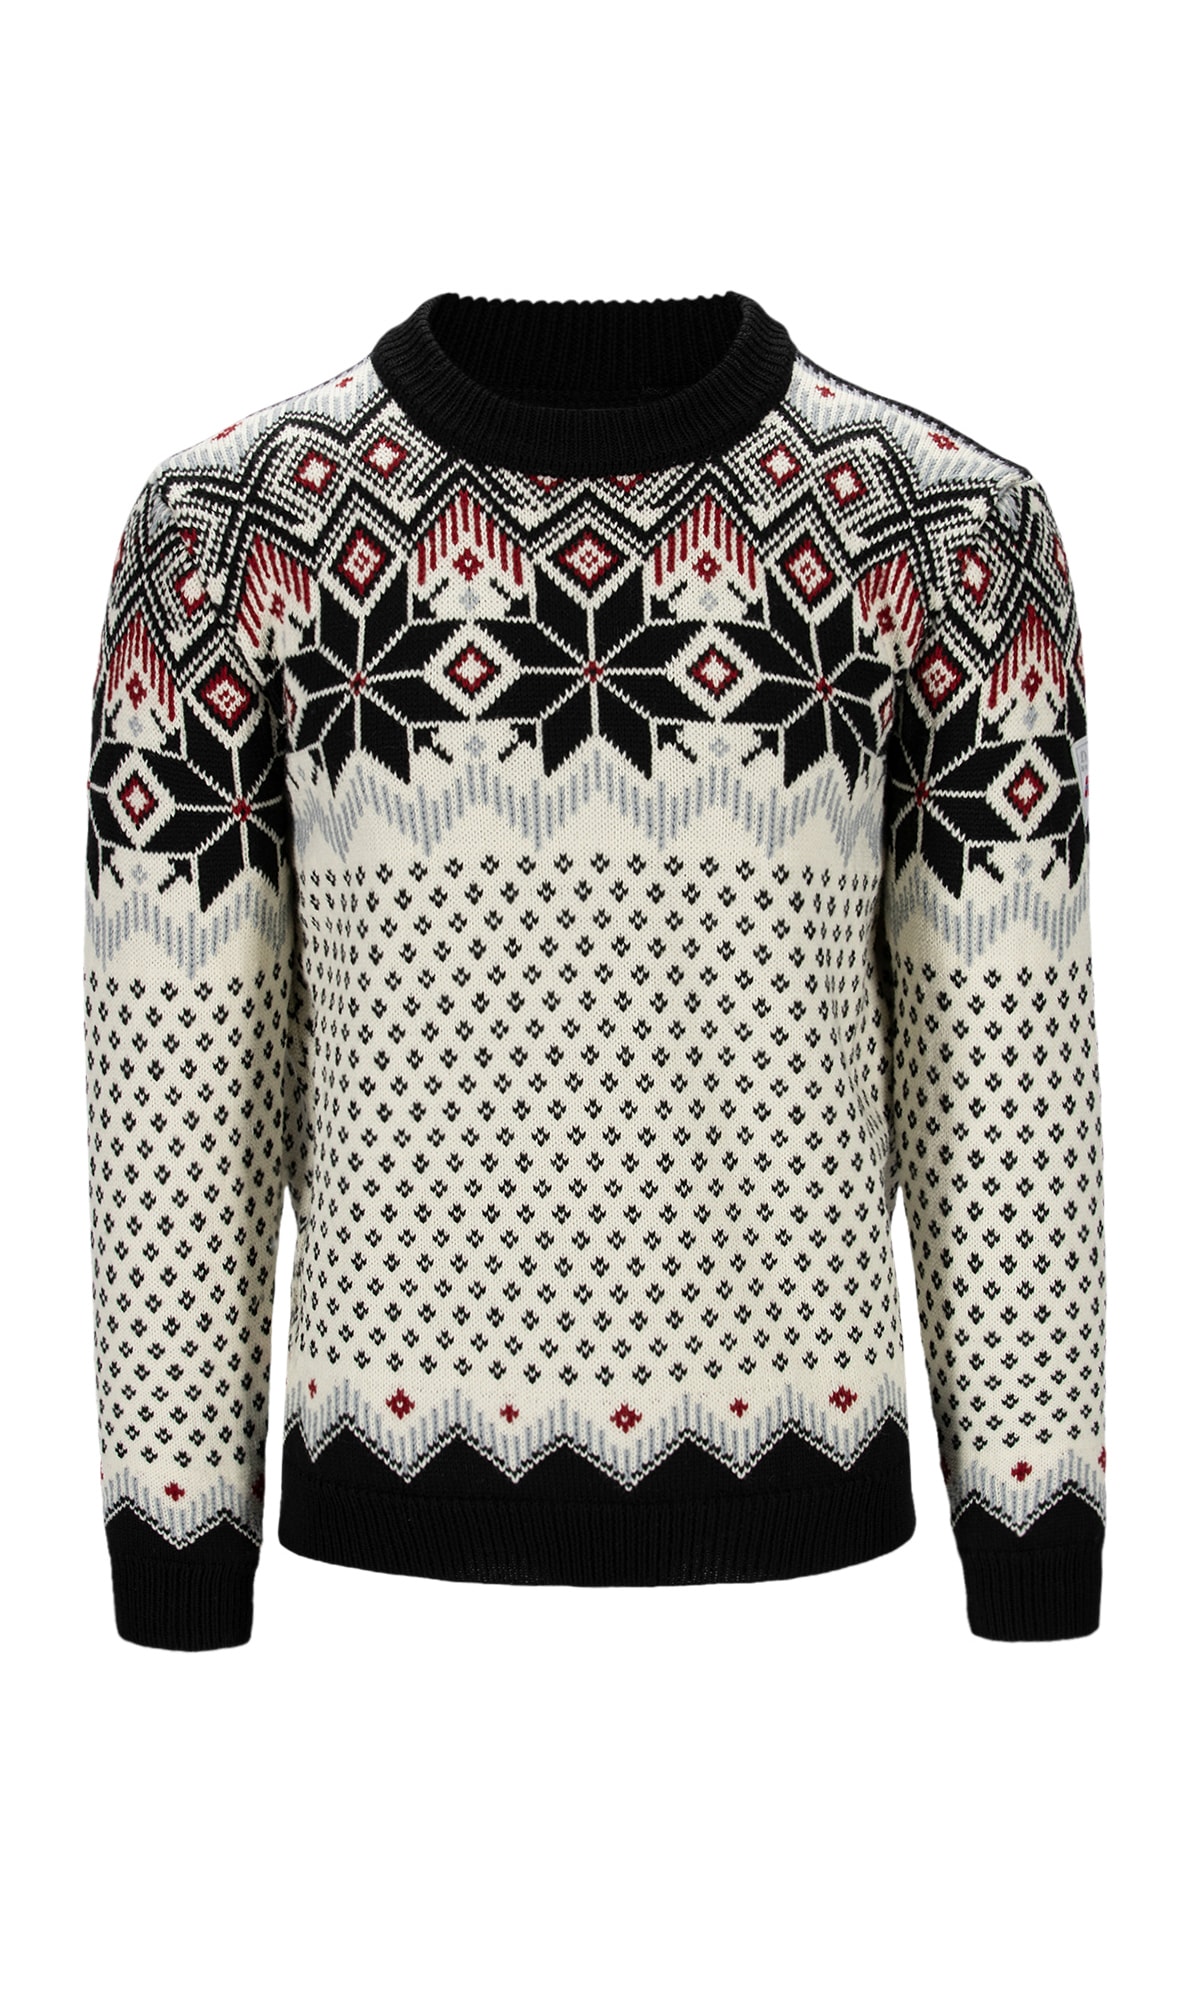 Vegard Sweater - Men - Black/OffWhite - Dale of Norway - Dale of Norway